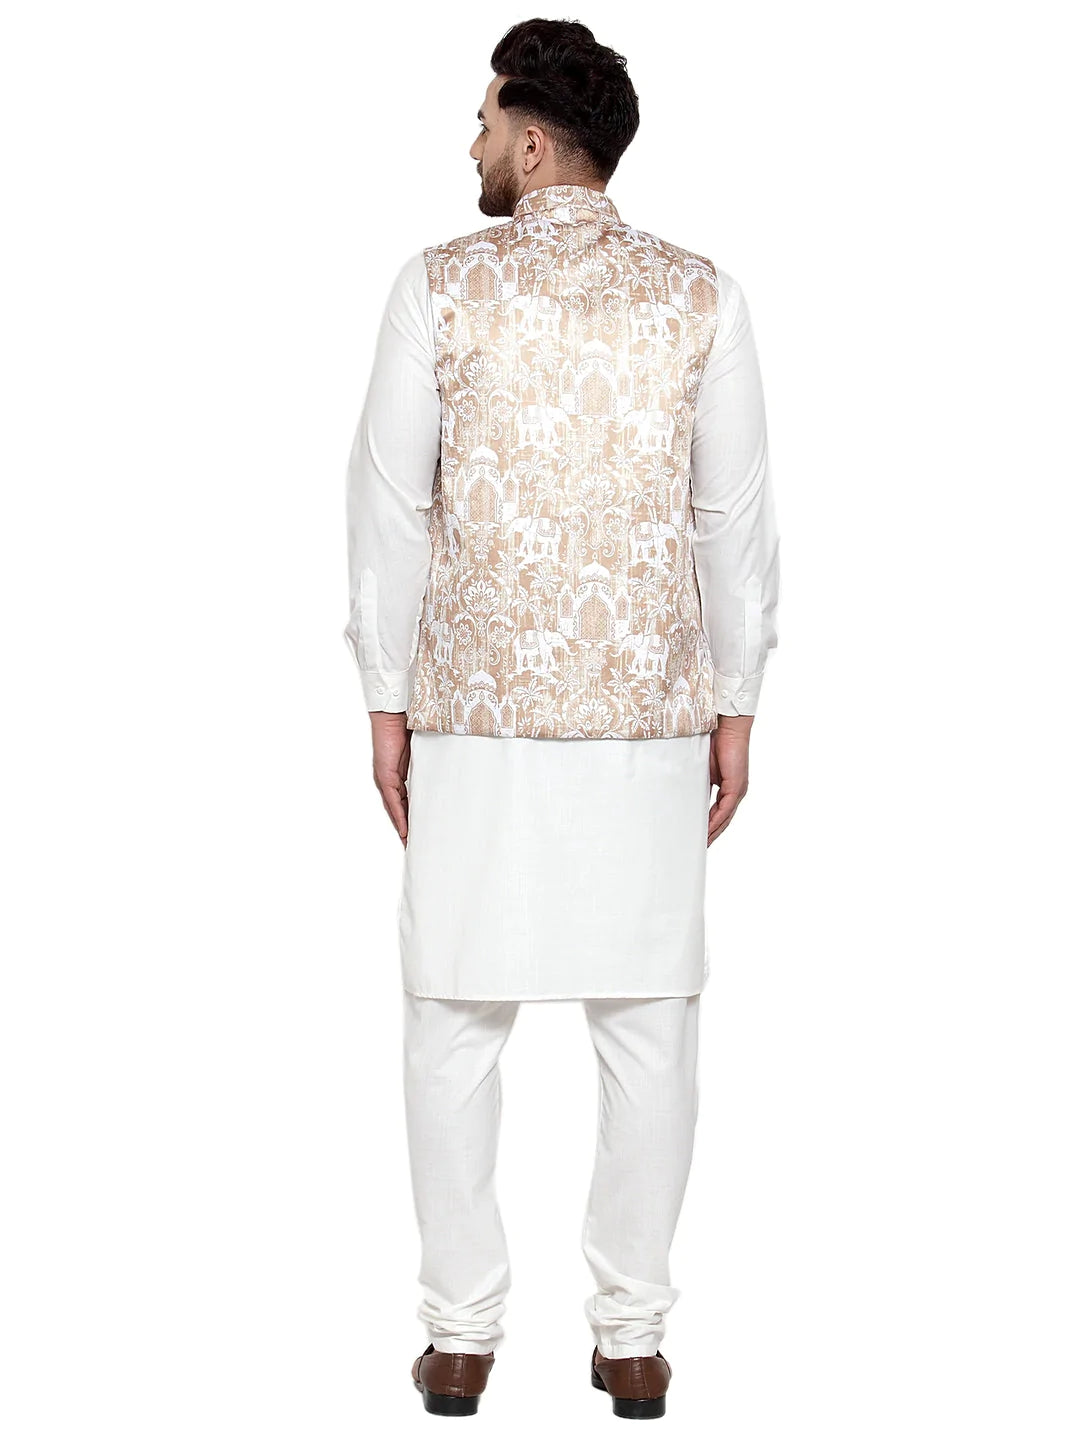 Jompers Men's Solid Cotton Kurta Pajama with Printed Waistcoat ( JOKP WC 4062 Beige-W )